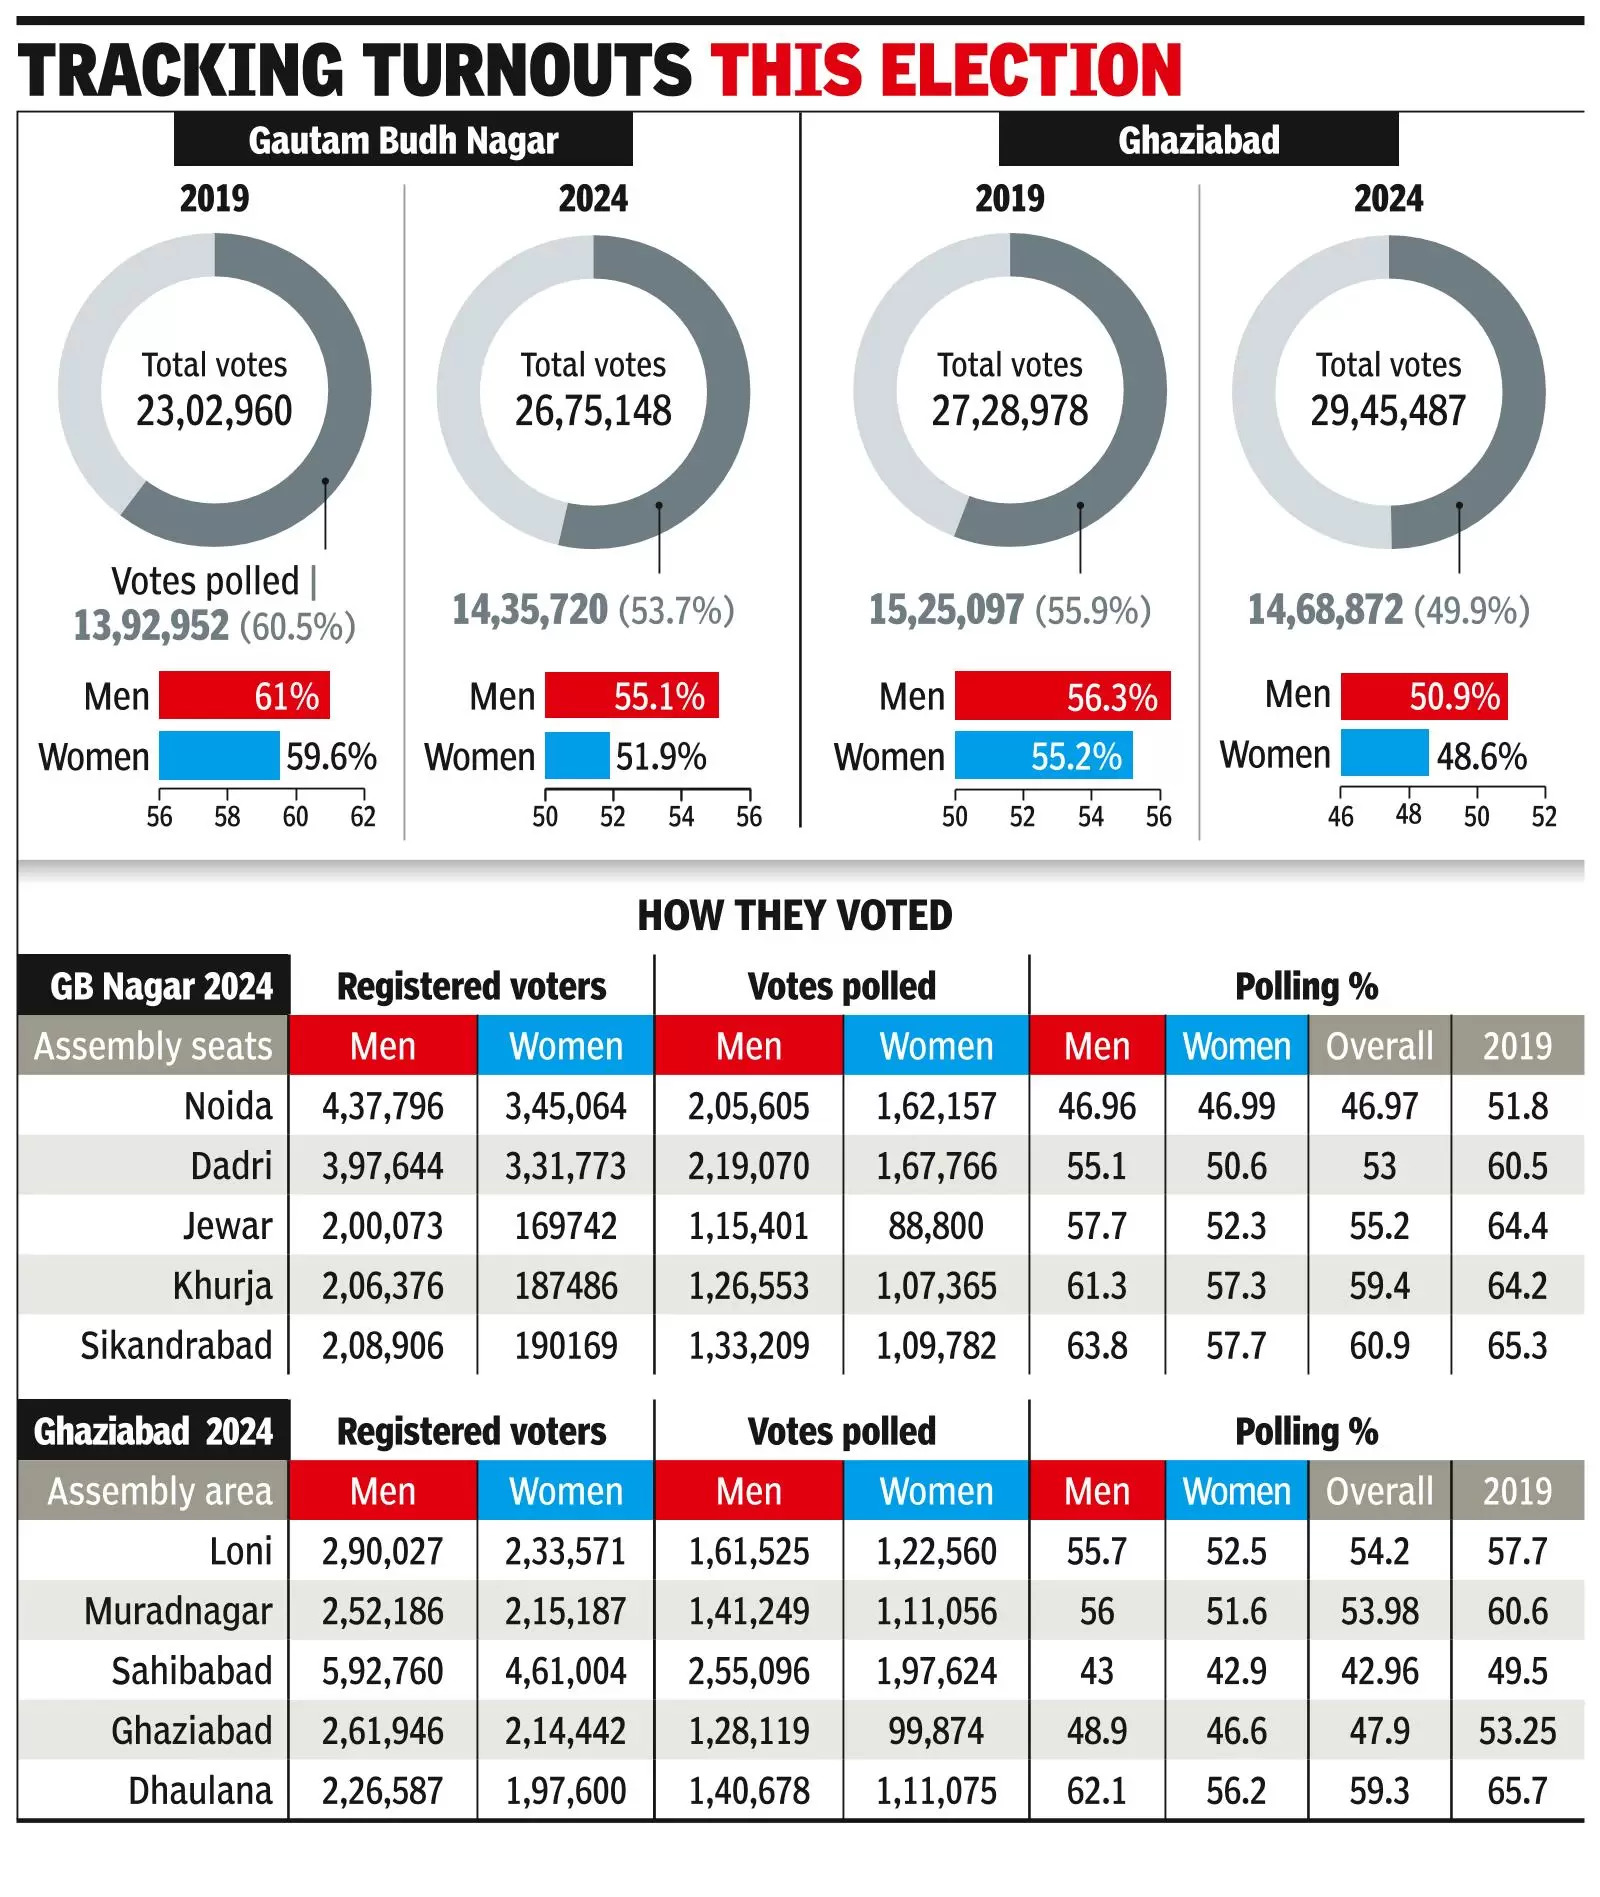 Women’s turnout in polls saw bigger drop than men’s in both seats of NCR